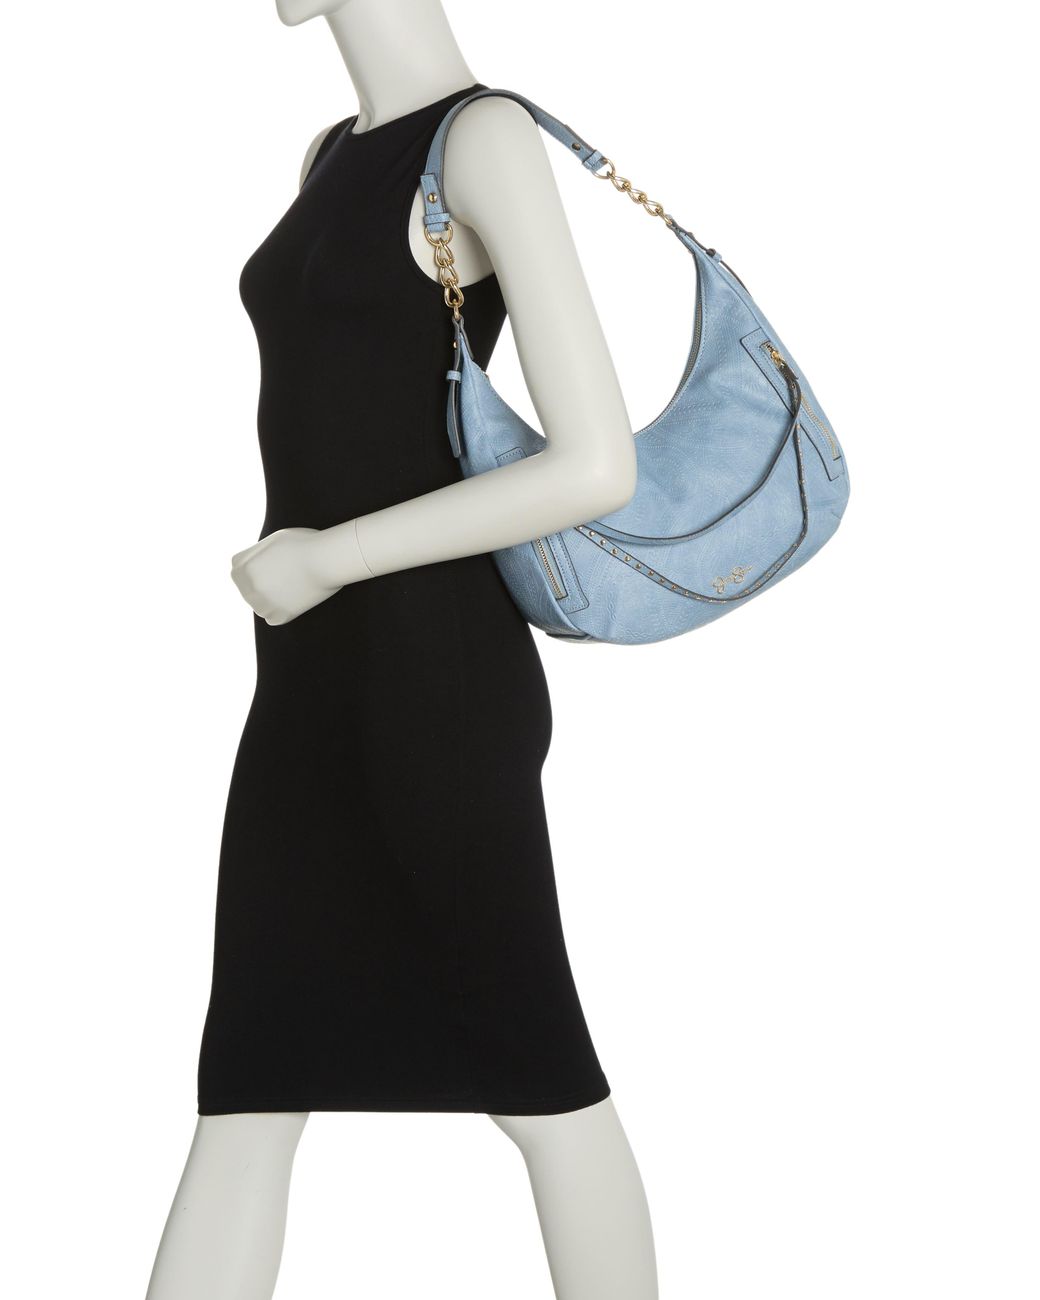 Jessica Simpson hobo style handbag